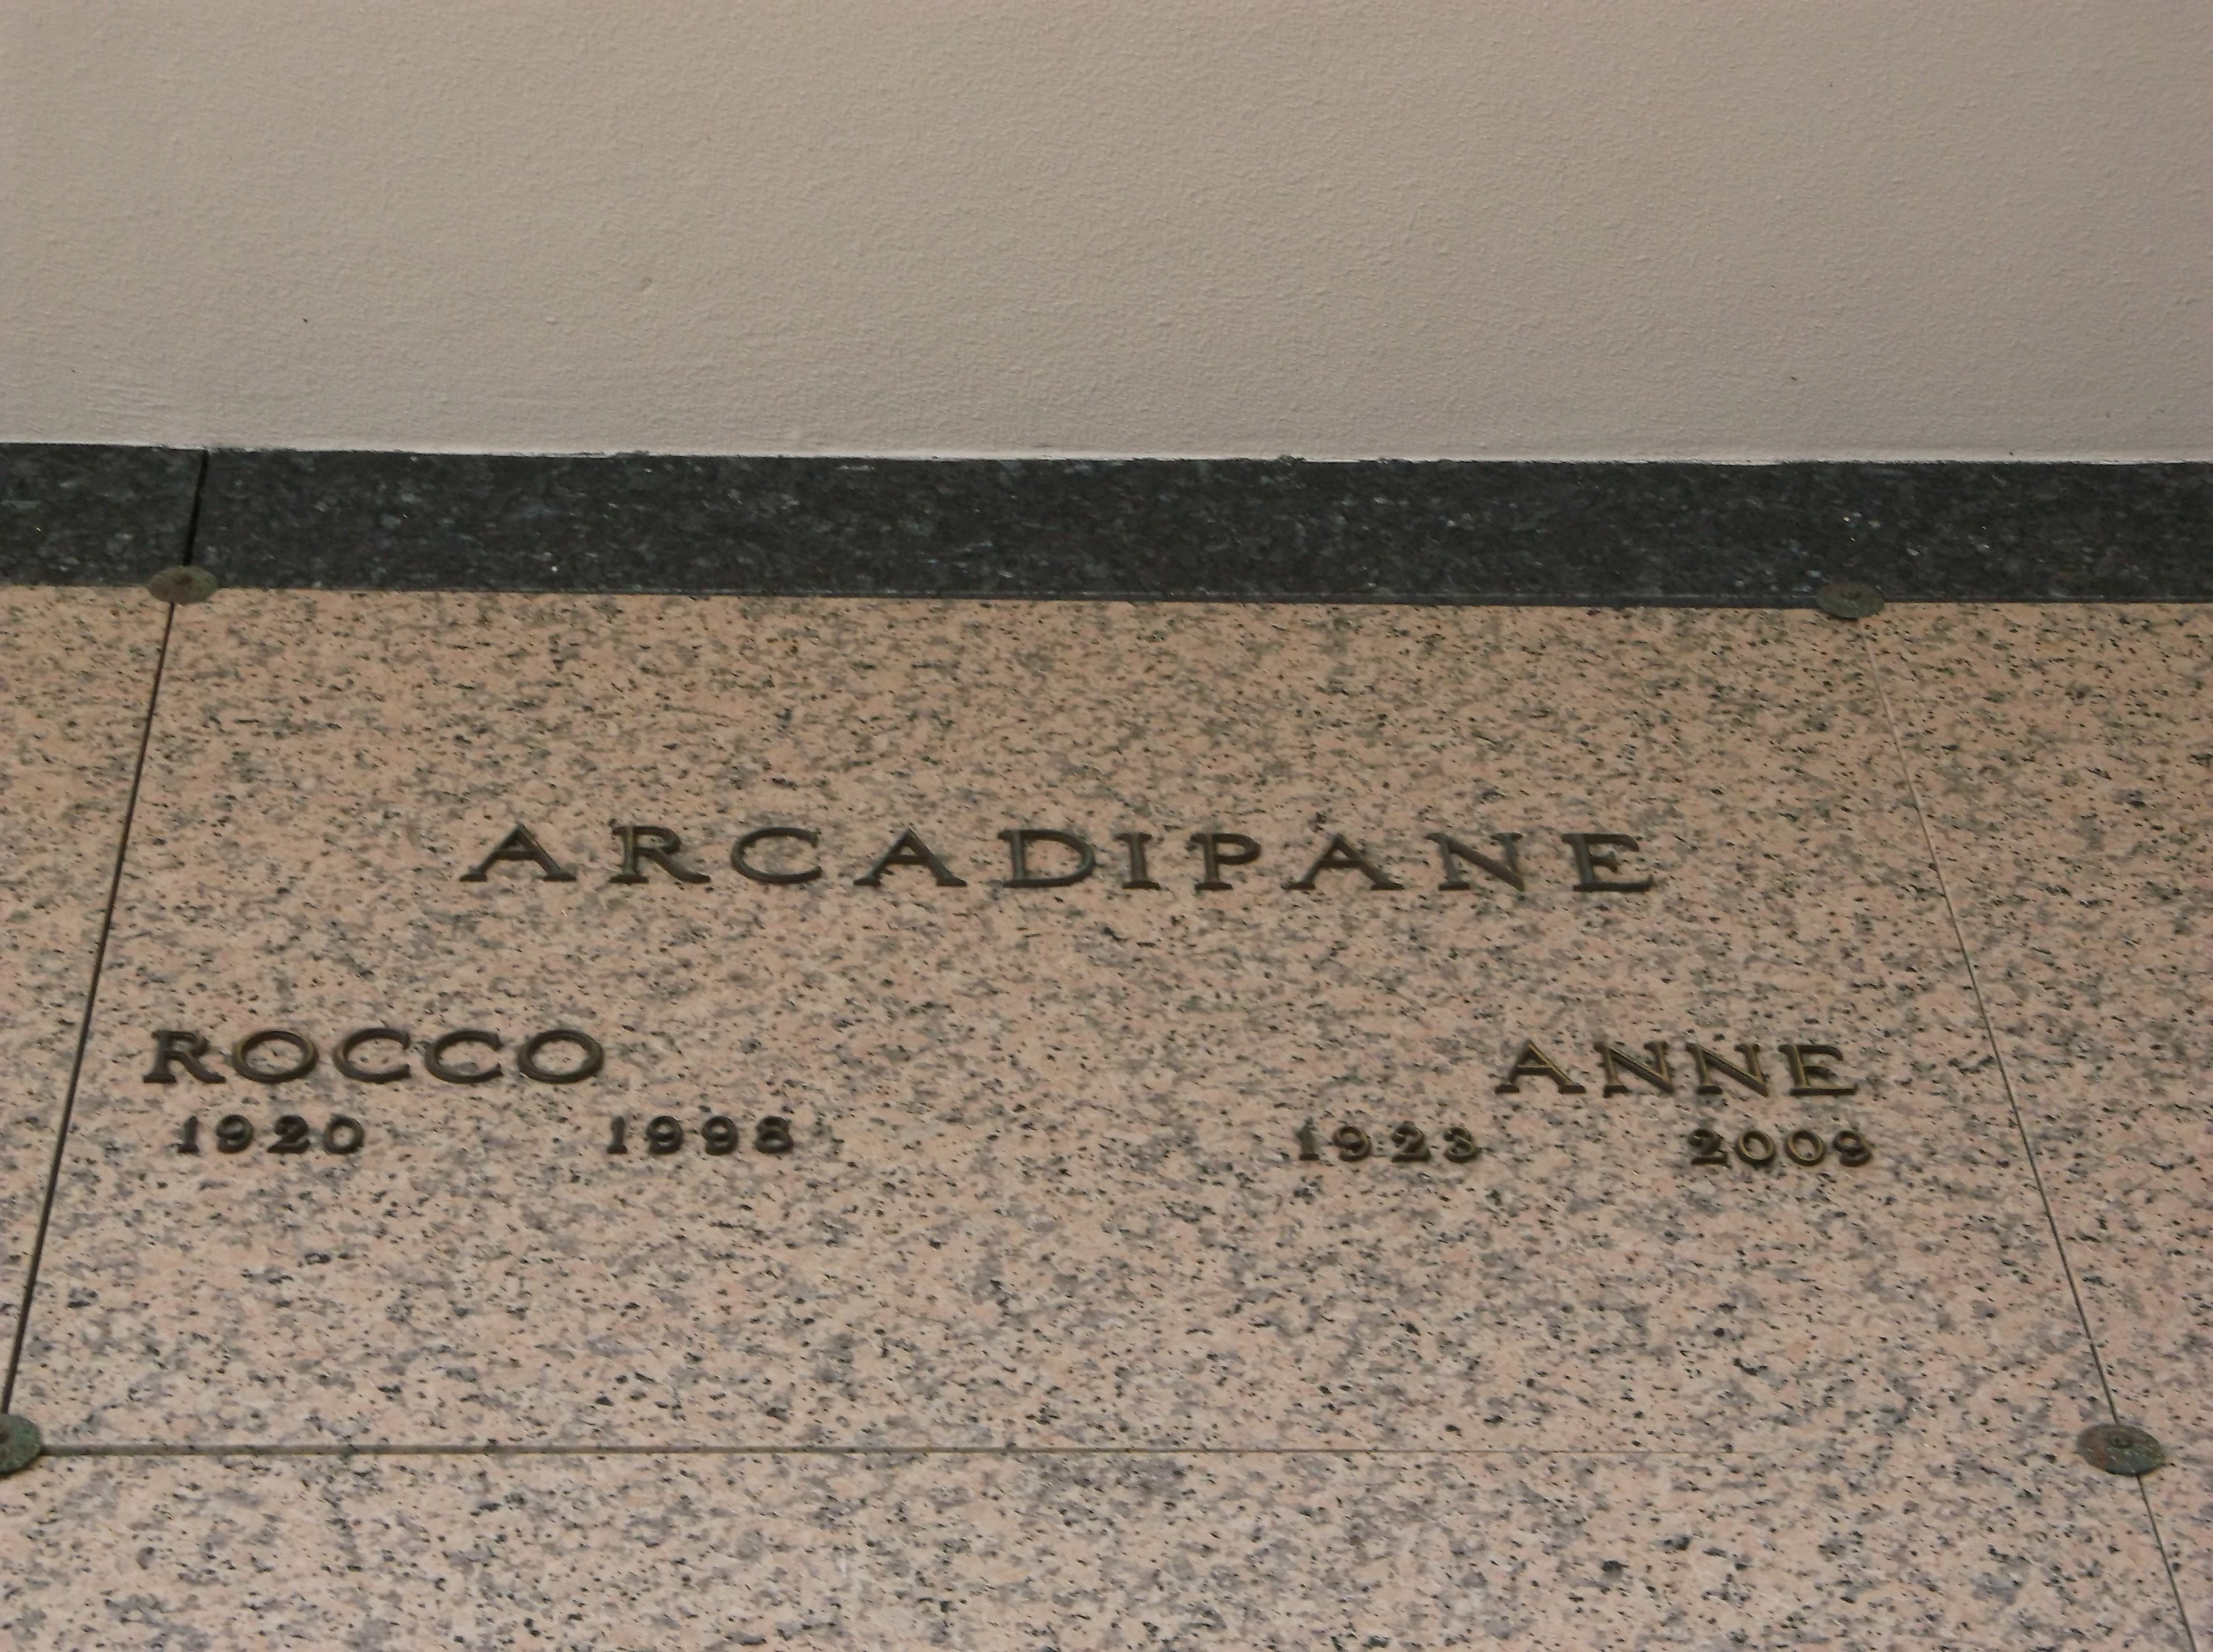 Rocco Arcadipane